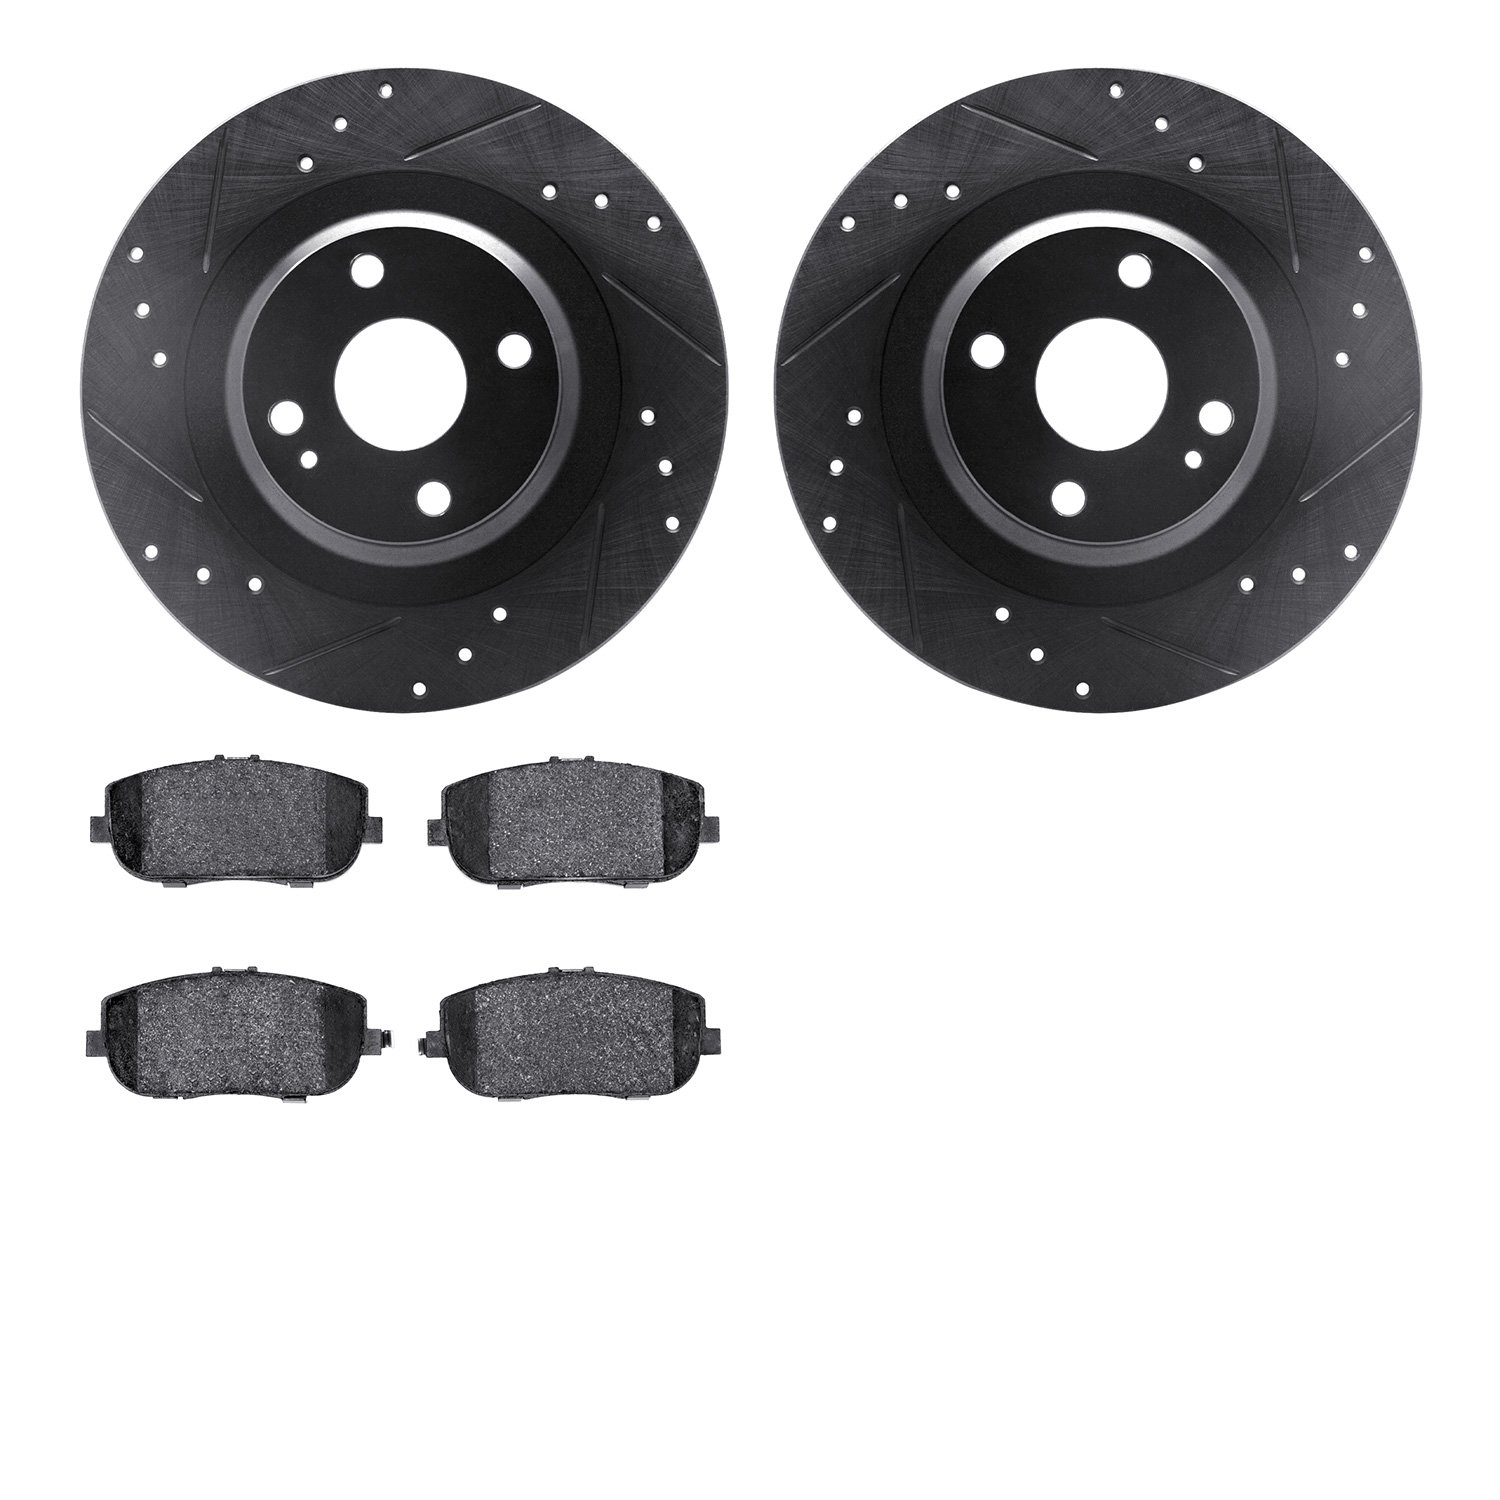 8302-80064 Drilled/Slotted Brake Rotors with 3000-Series Ceramic Brake Pads Kit [Black], Fits Select Multiple Makes/Models, Posi